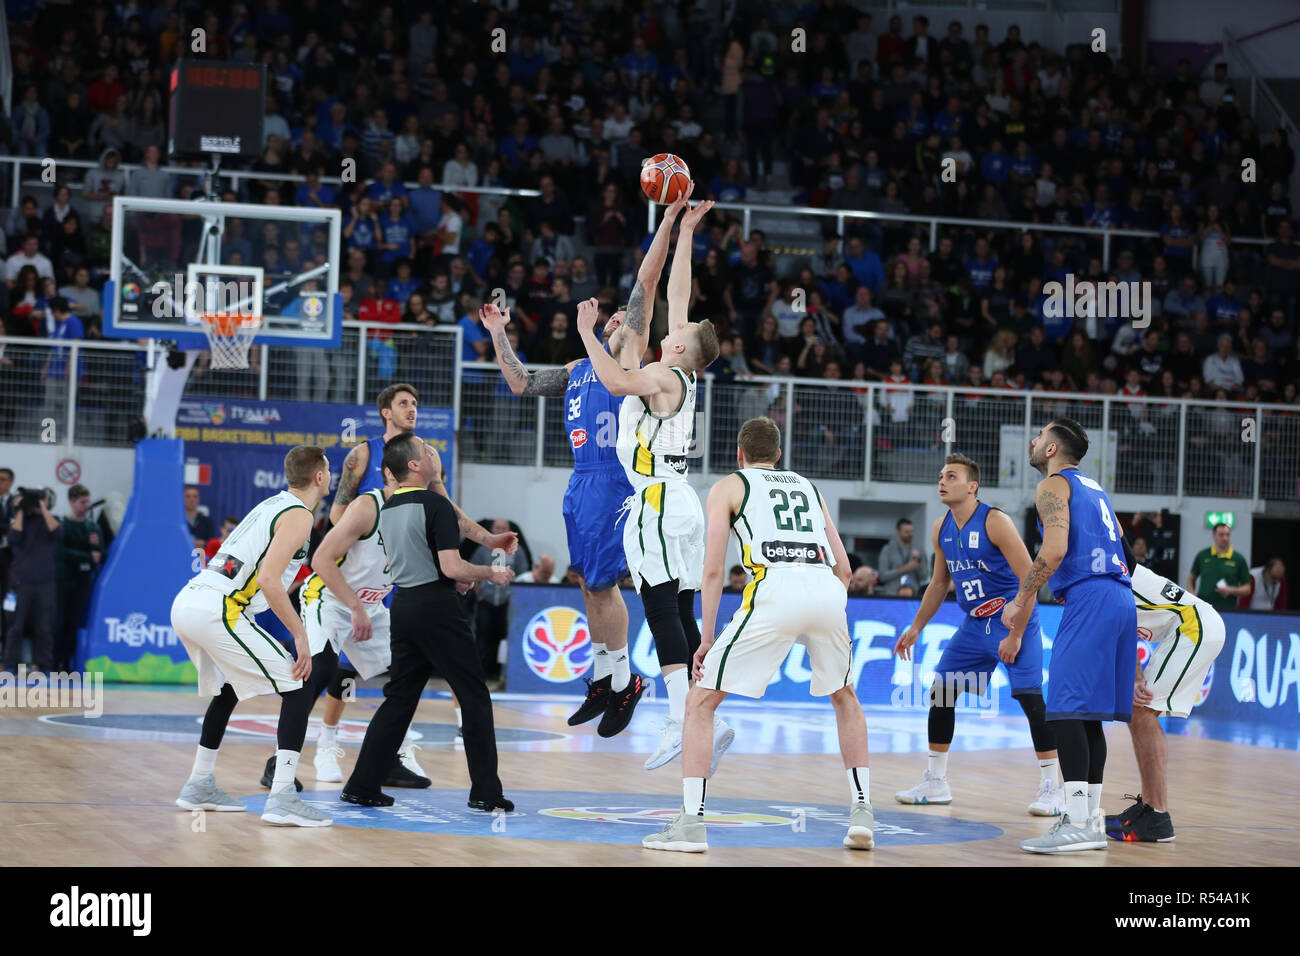 Brescia, Italy. 29th Nov, 2018. FIBA Basketball World Cup Qualifiers: Italy v Lithuania, Brescia, Italy. Jump ball Credit: Mickael Chavet/Alamy Live News Stock Photo